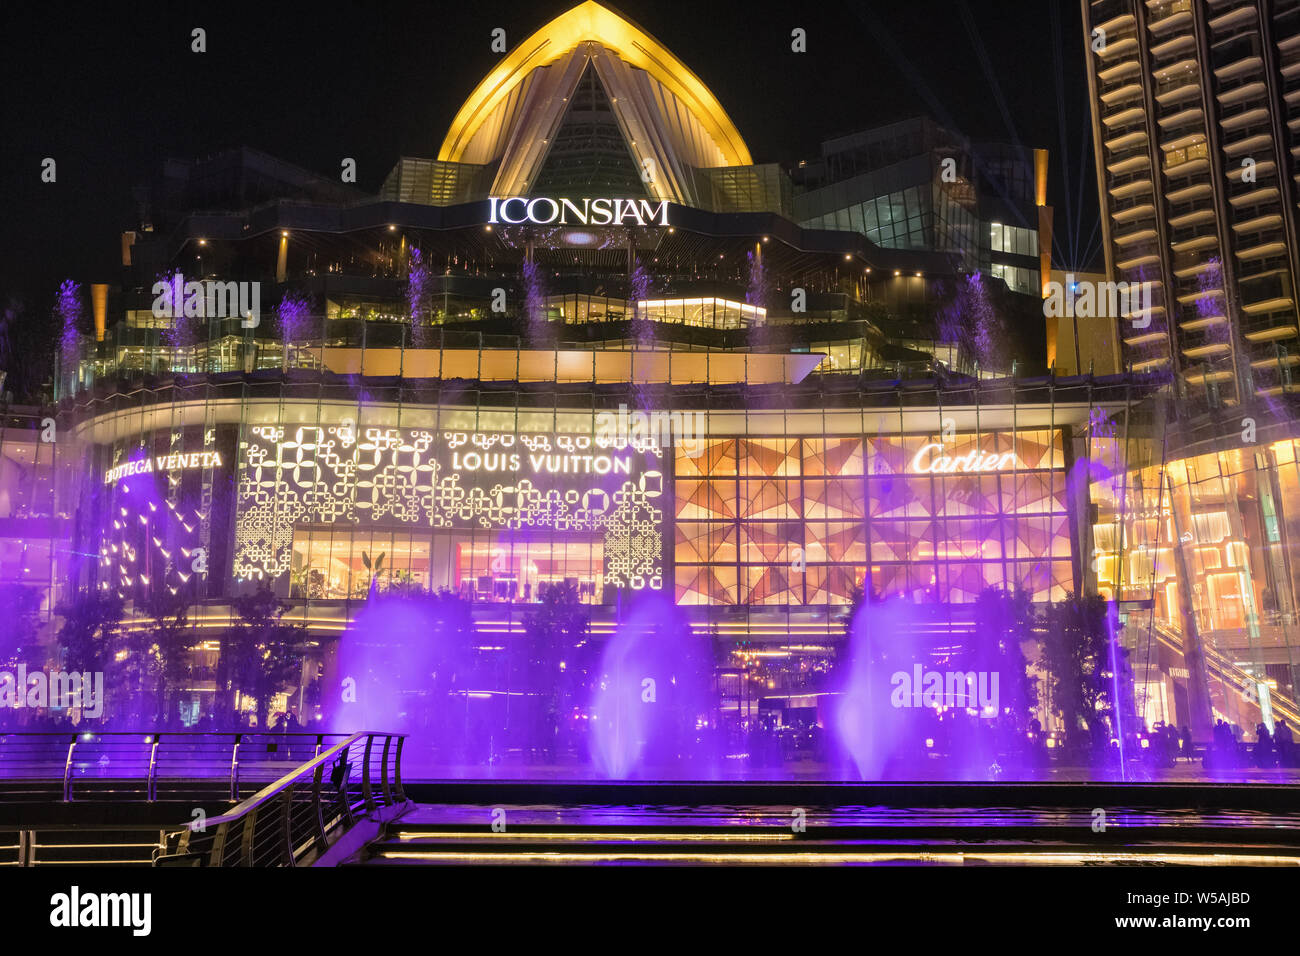 Bangkok, Thailand - 5. März 2019: Multimedia springbrunnenshow Iconsiam, modernen Luxus Shopping Mall auf dem Chao Phraya in Bangkok. Stockfoto